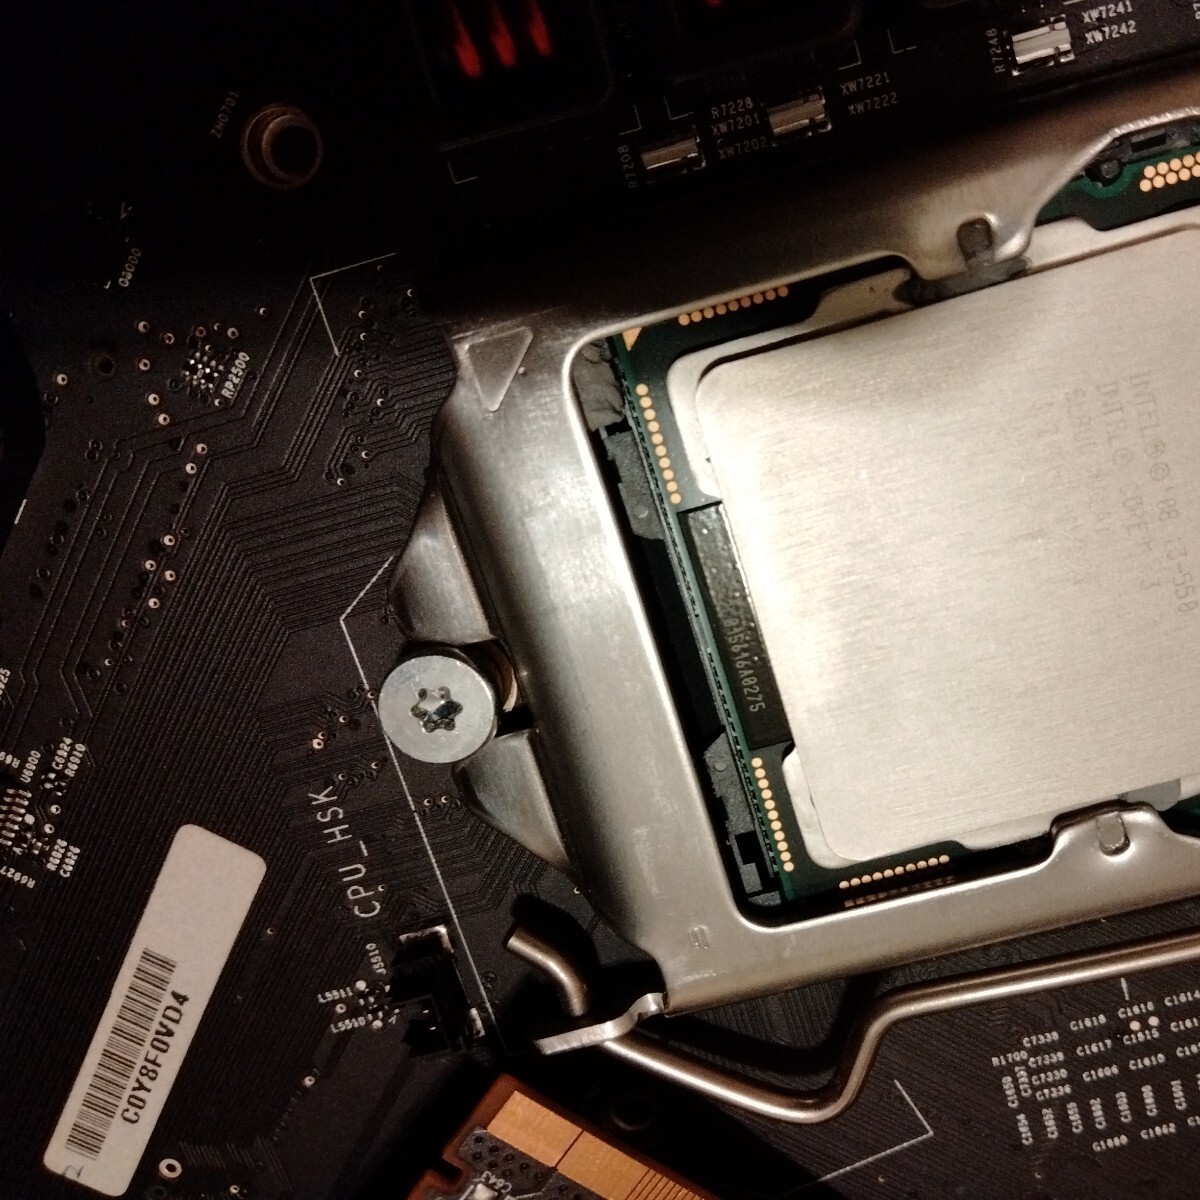 # Intel Core i3-550 3.2GHz CPU # used #iMac 2010. use 